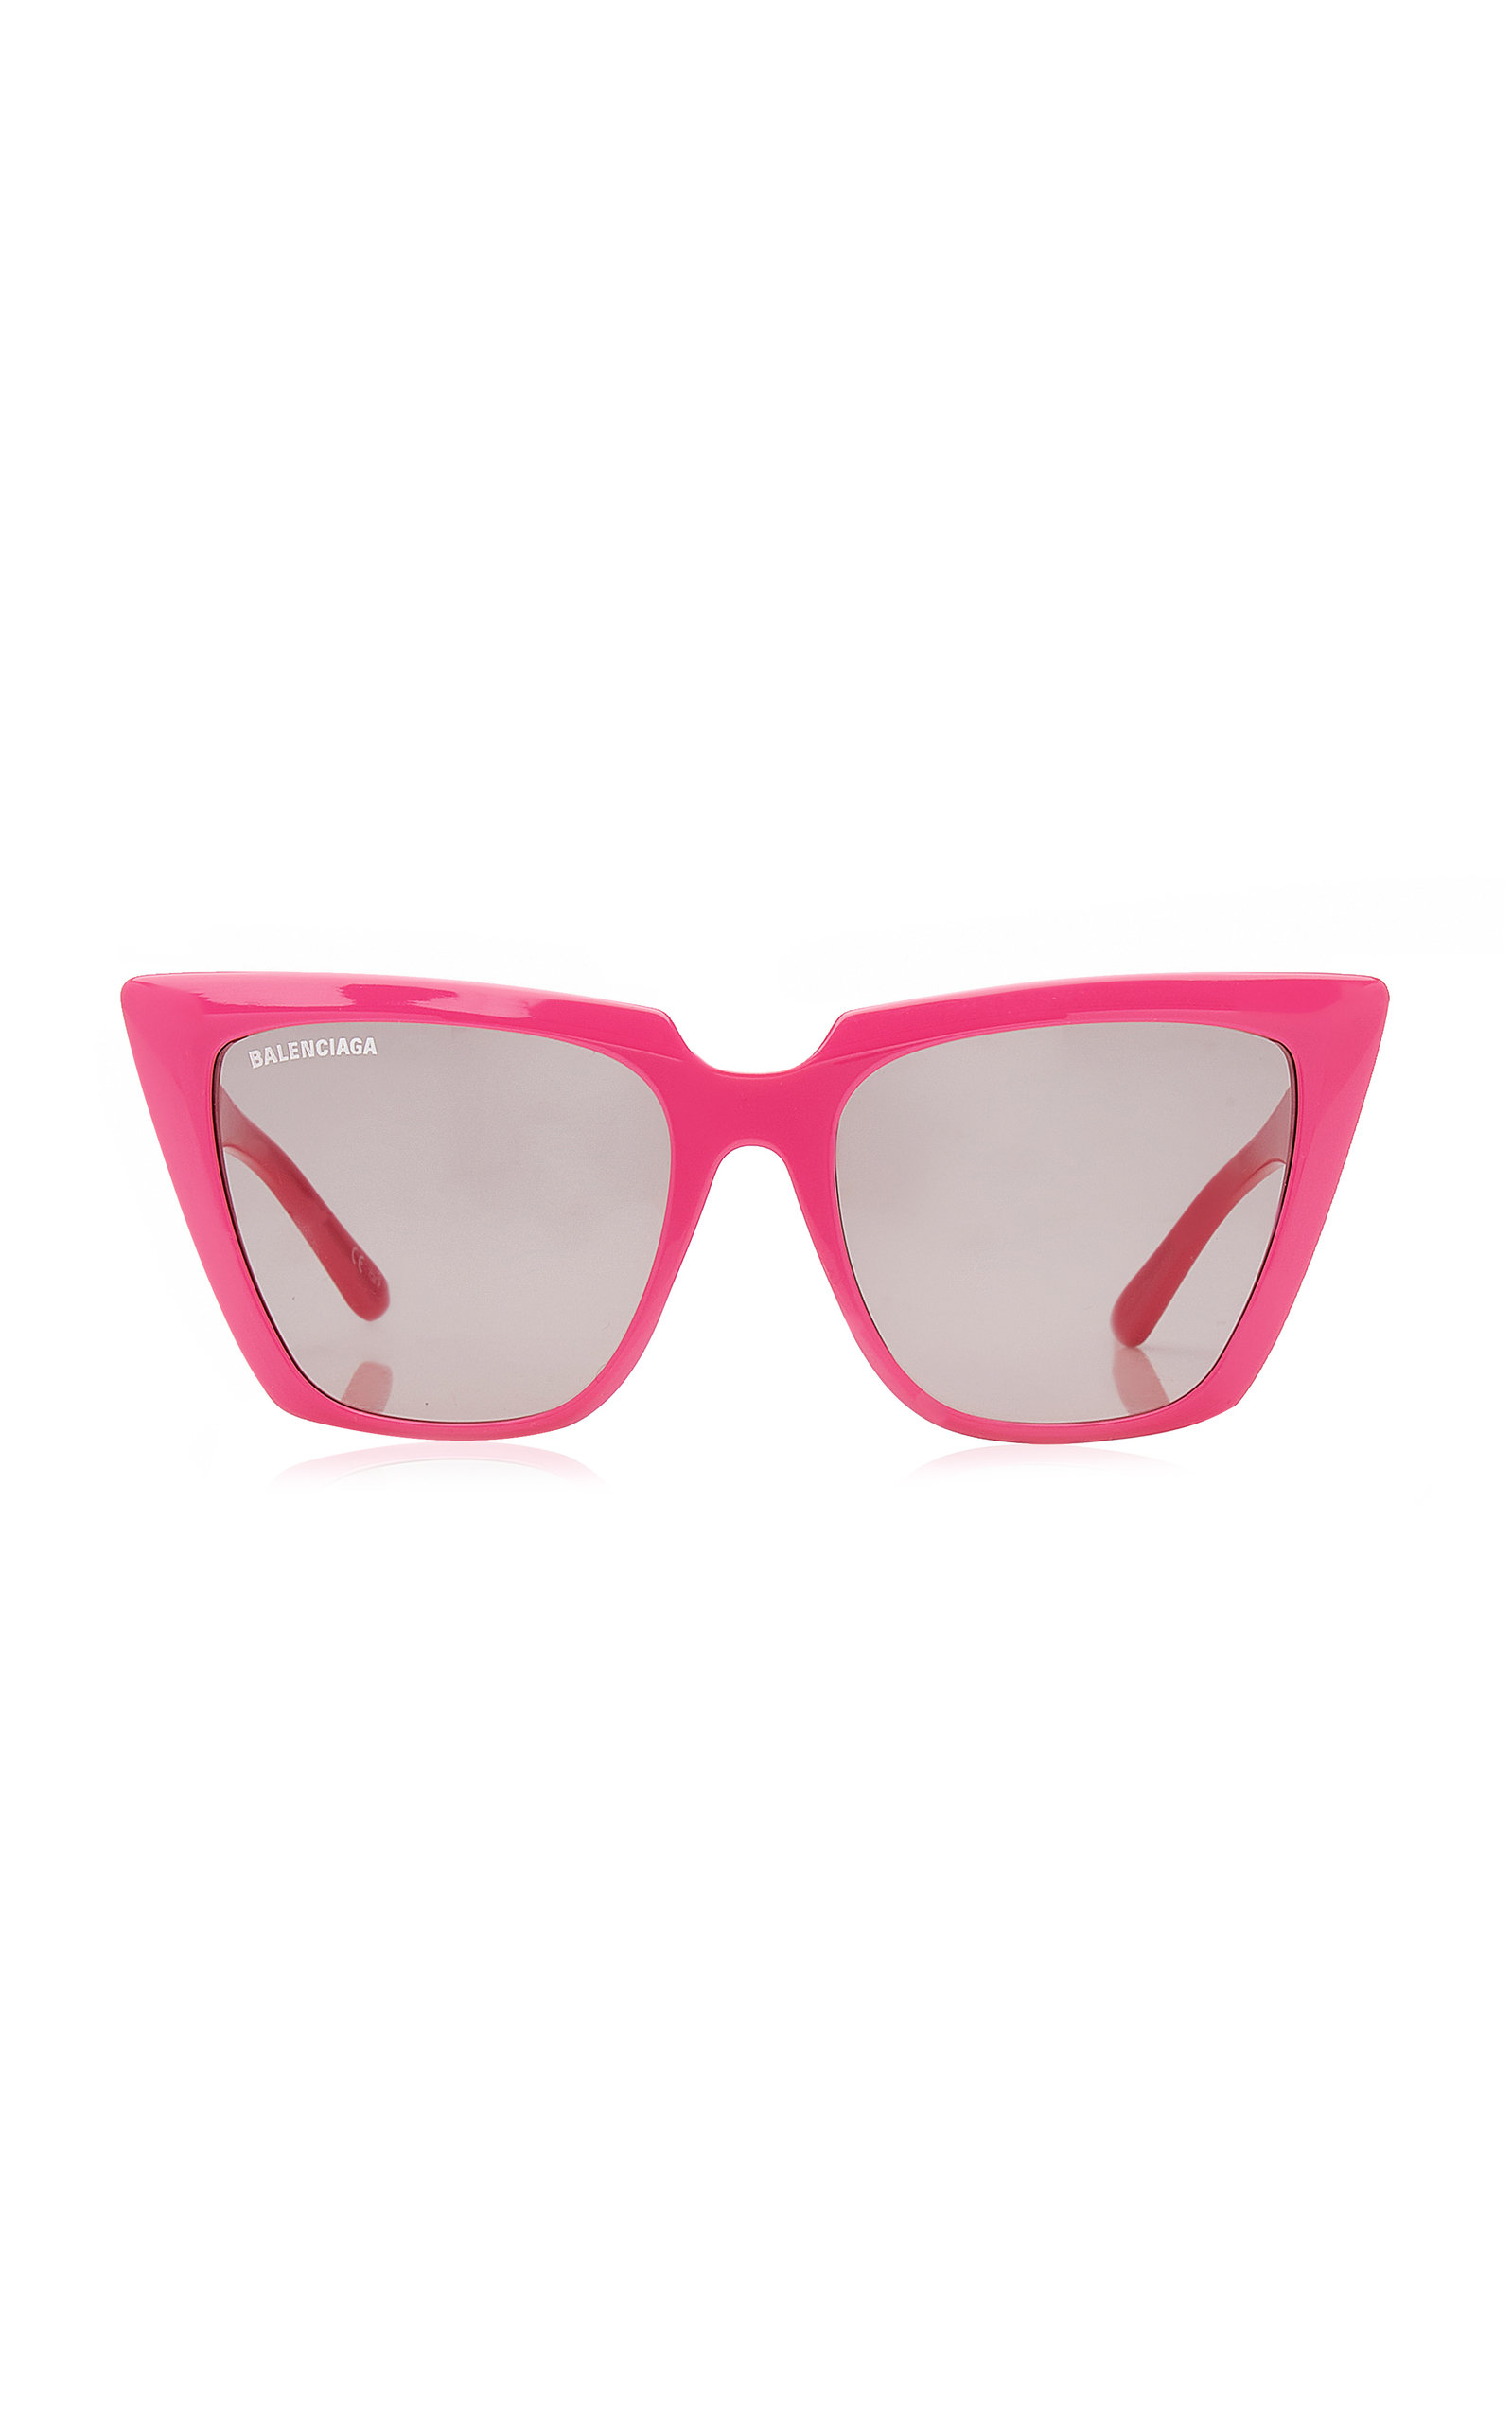 Balenciaga - Women's Cat-Eye Acetate Sunglasses - Pink - OS - Moda Operandi